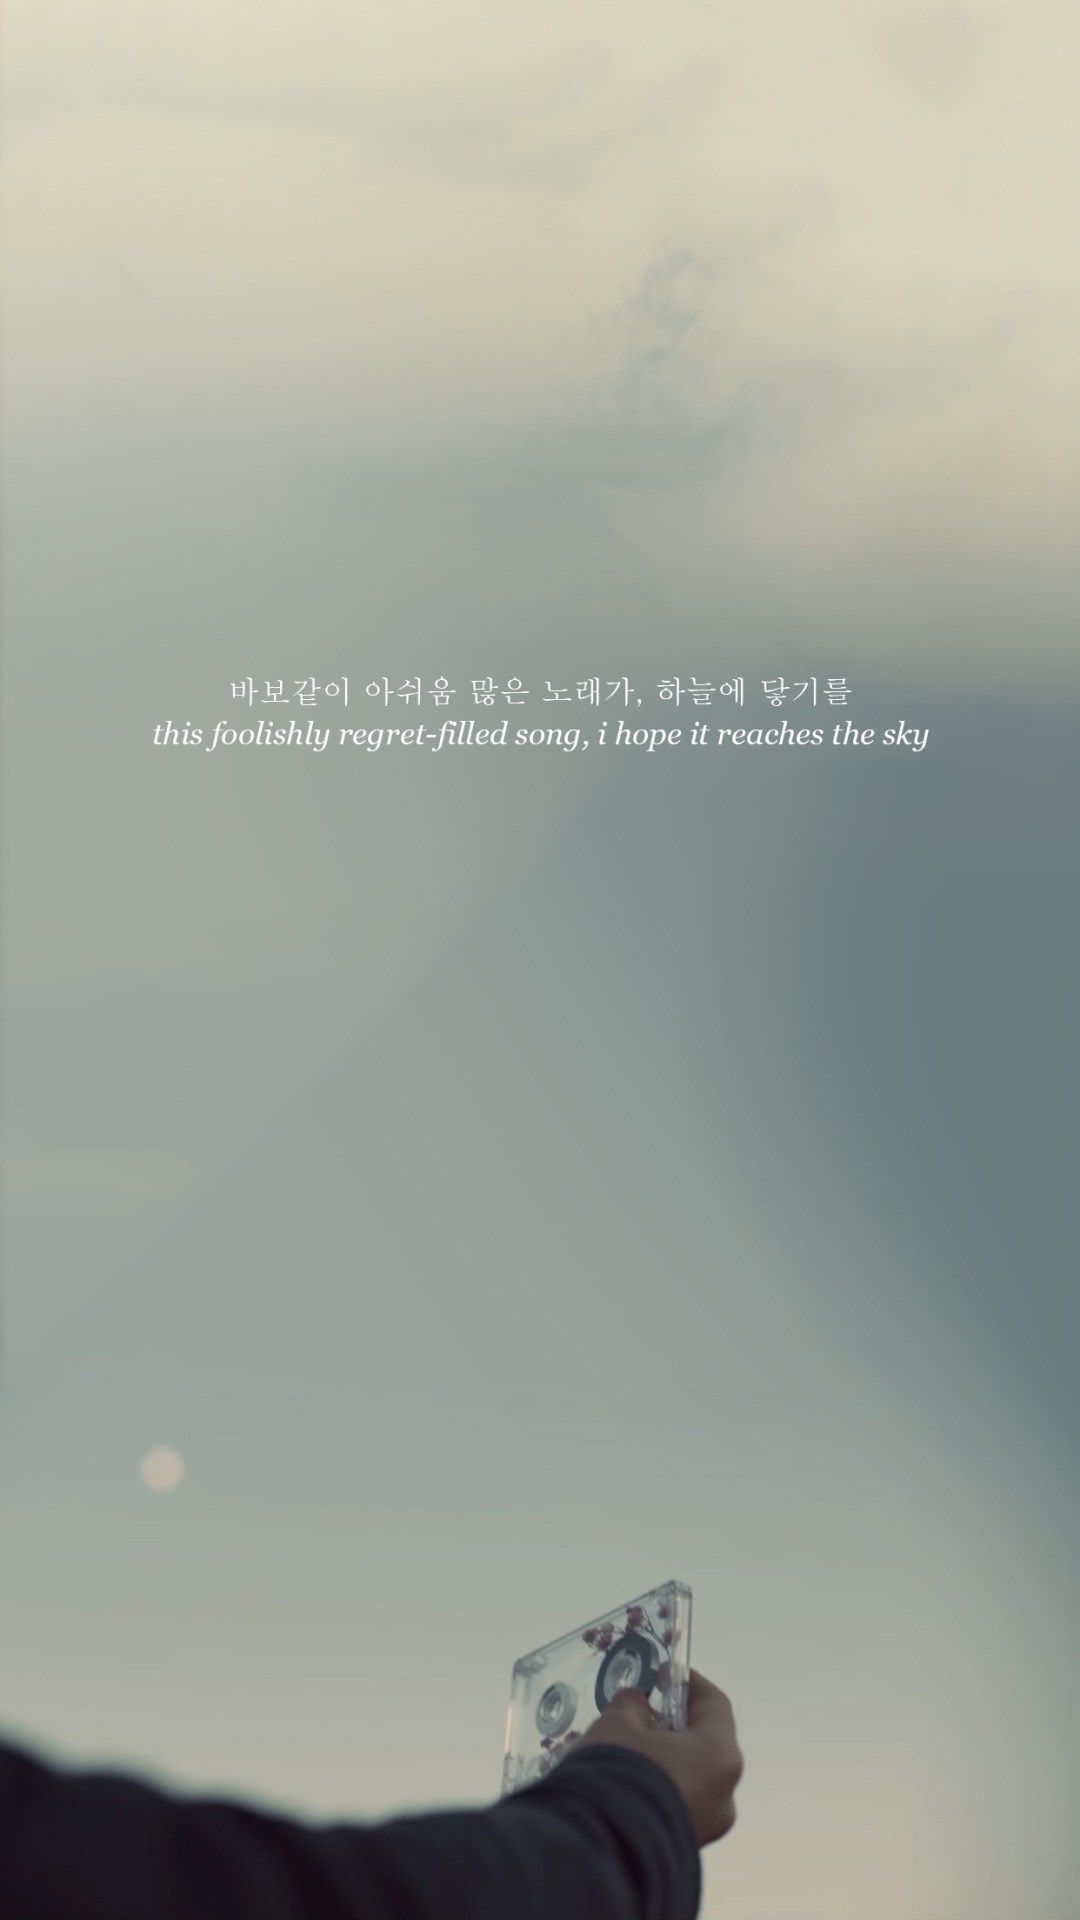 Aesthetic Korean Quotes Wallpaper. iPhone wallpaper, Kpop iphone wallpaper, Aesthetic wallpaper